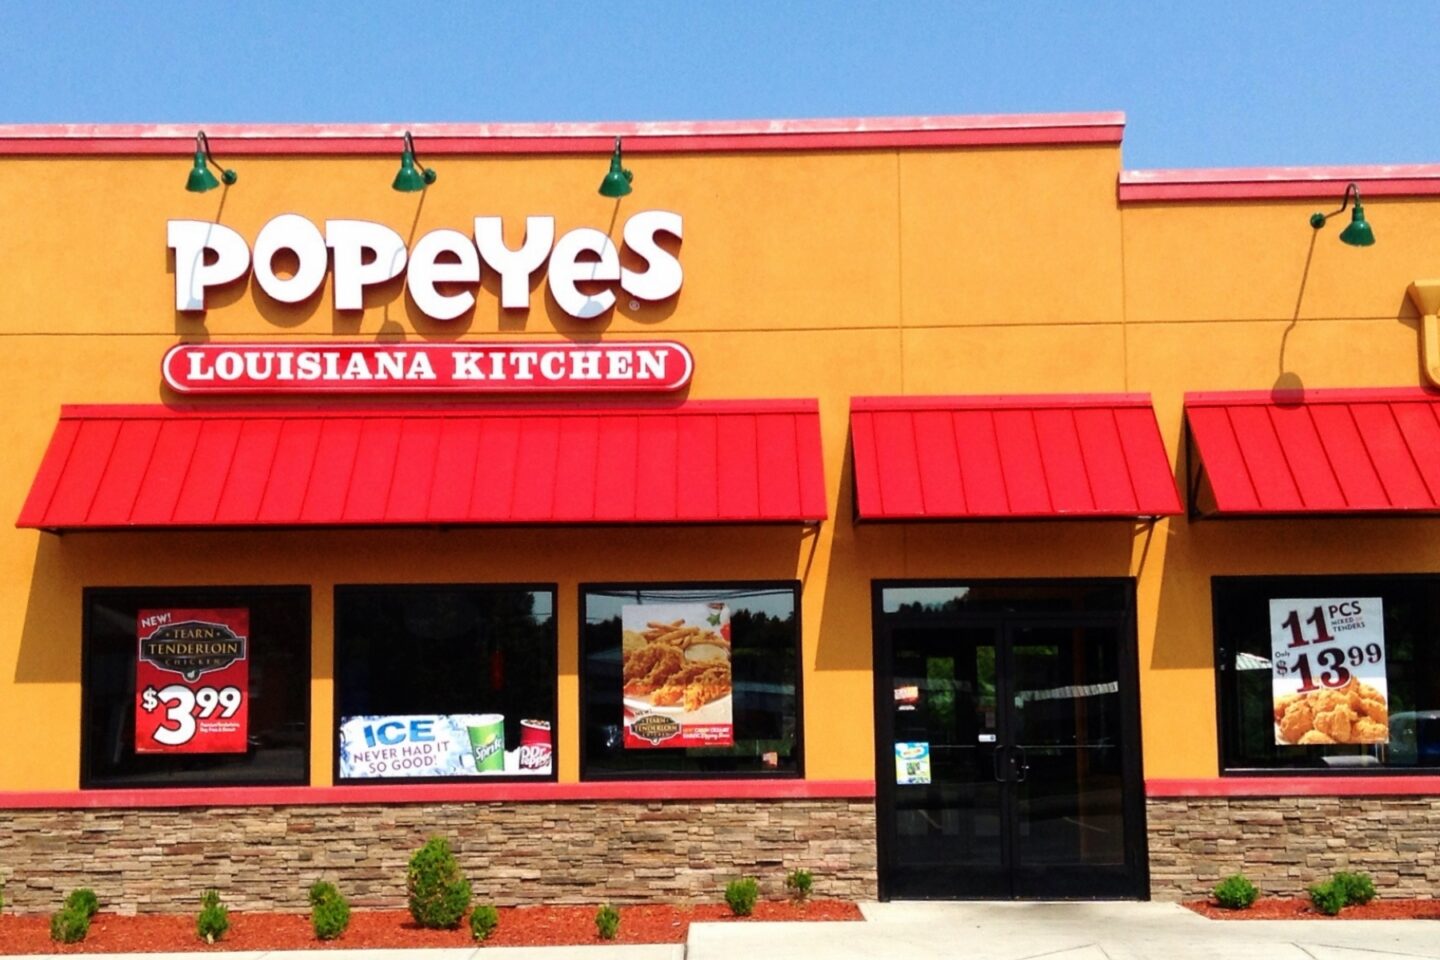 Popeyes Louisiana Kitchen storefront